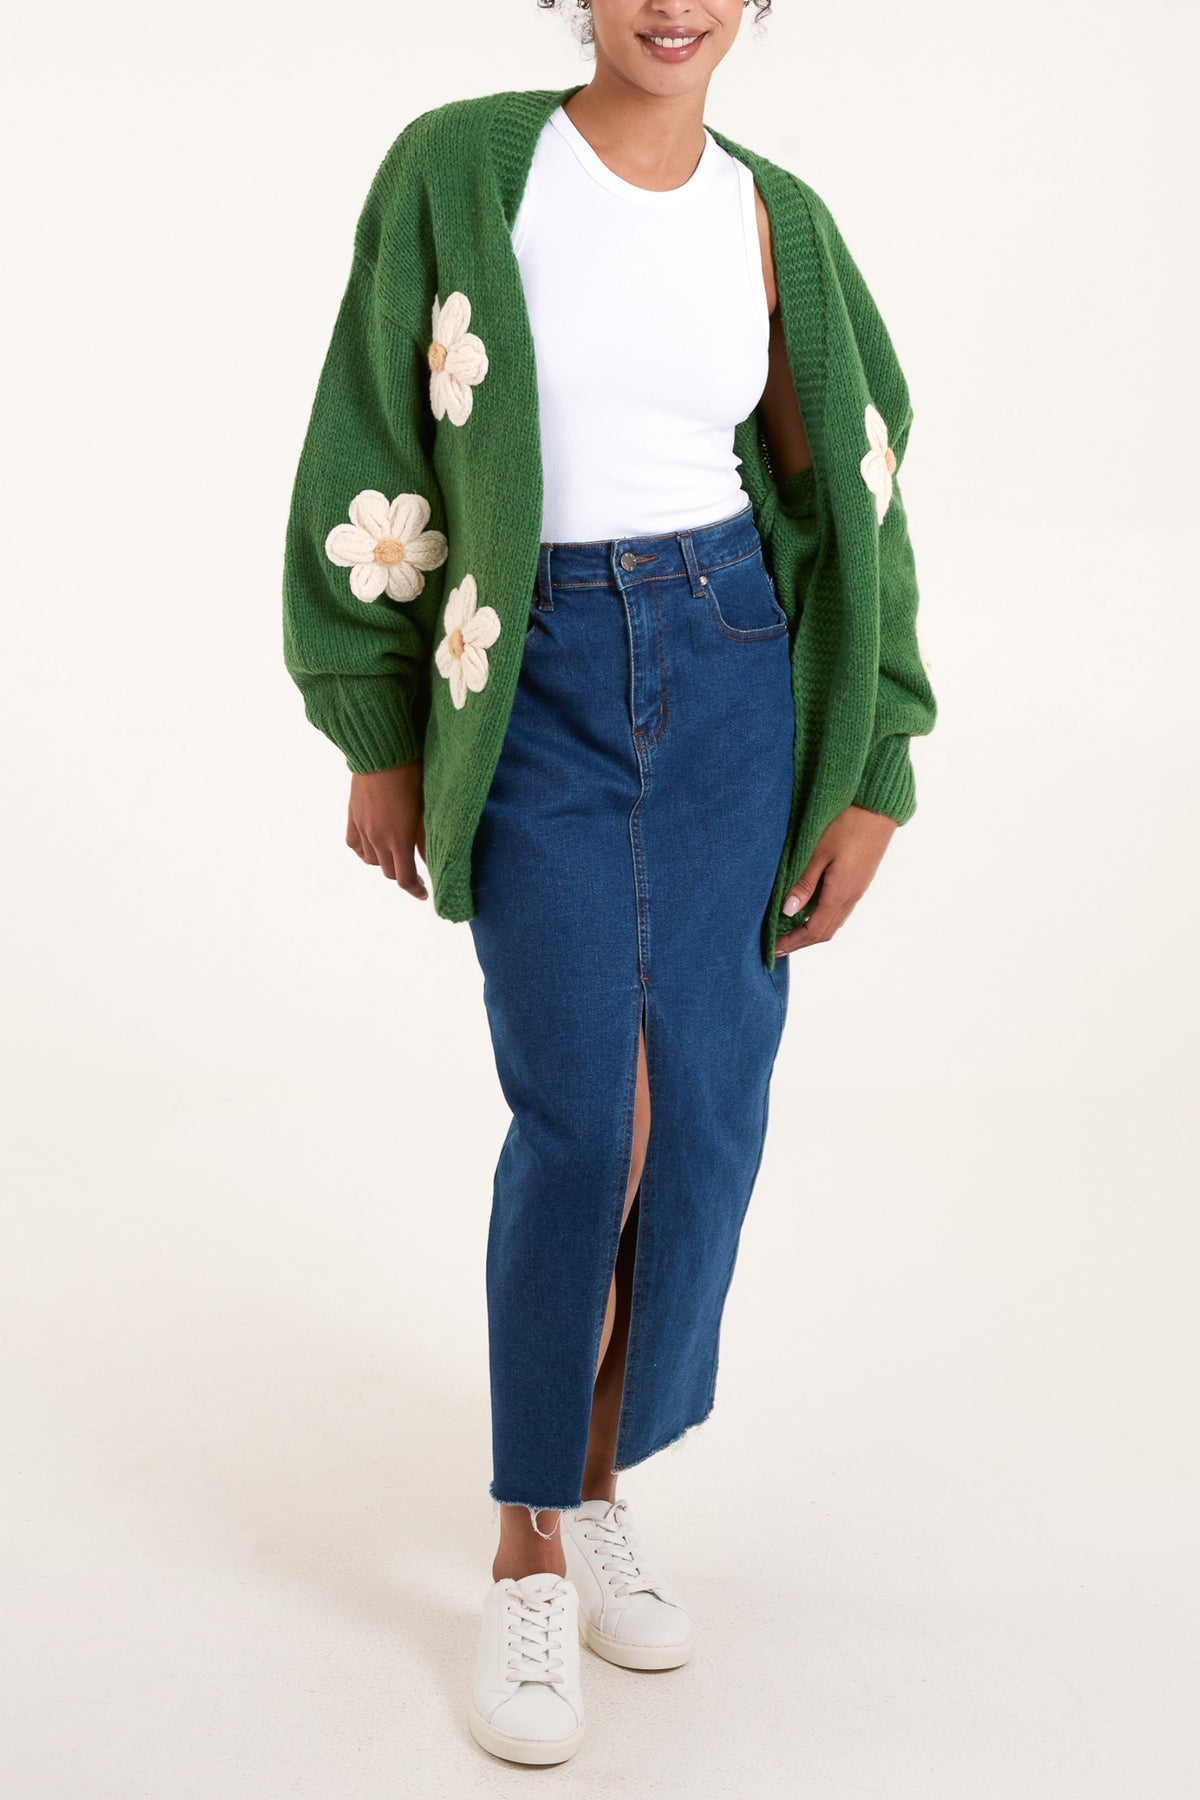 Daisy Flower Knitted Cardigan